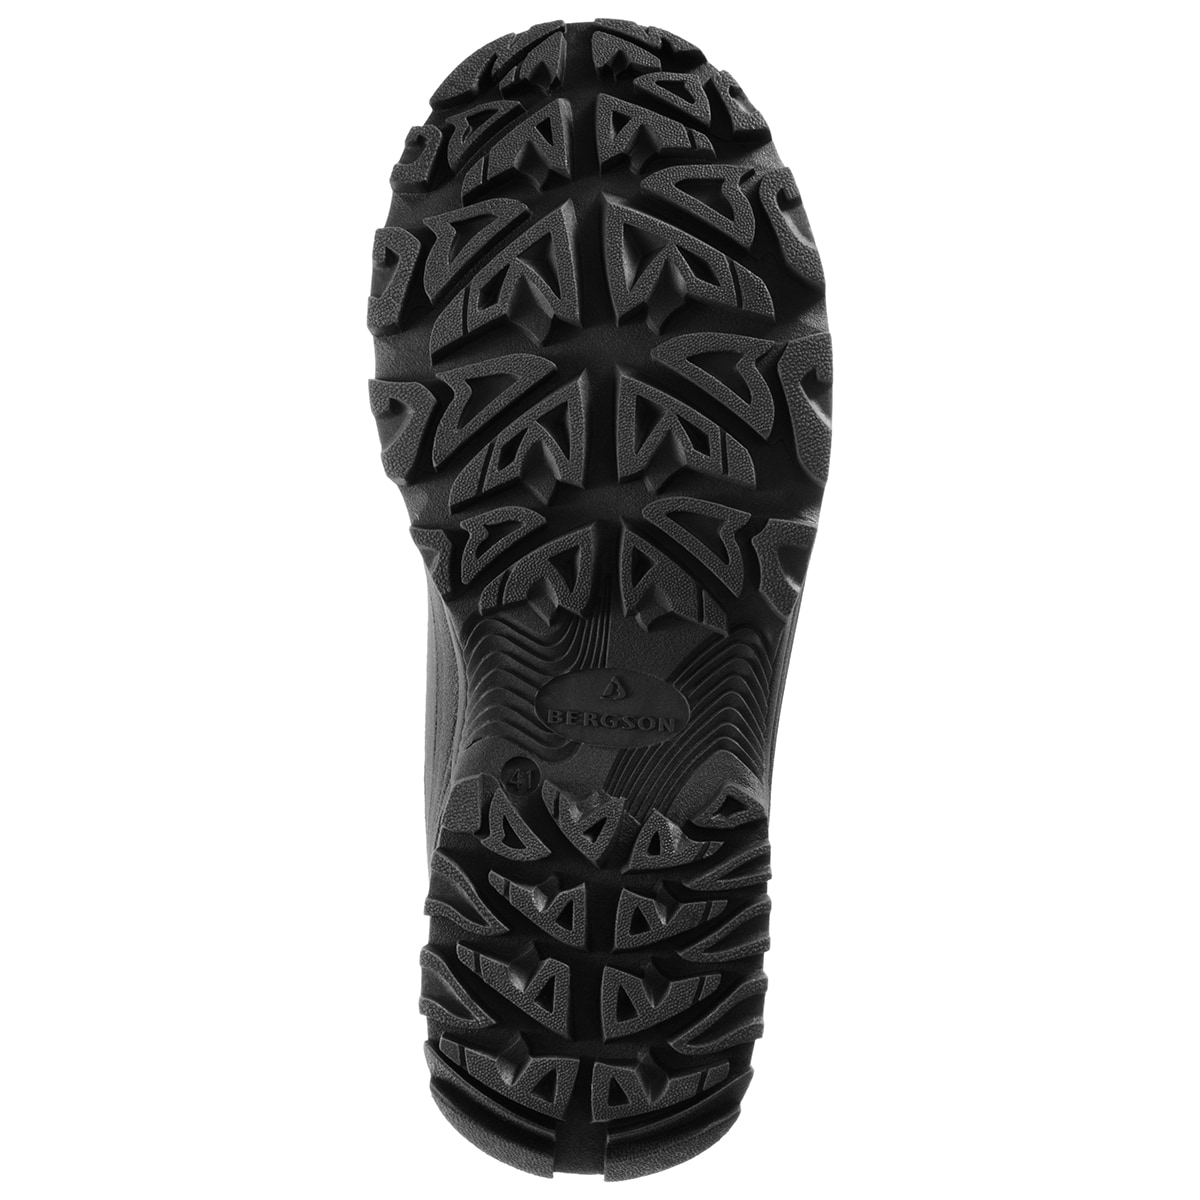 Buty śniegowce Bergson Snowlander SB - Black